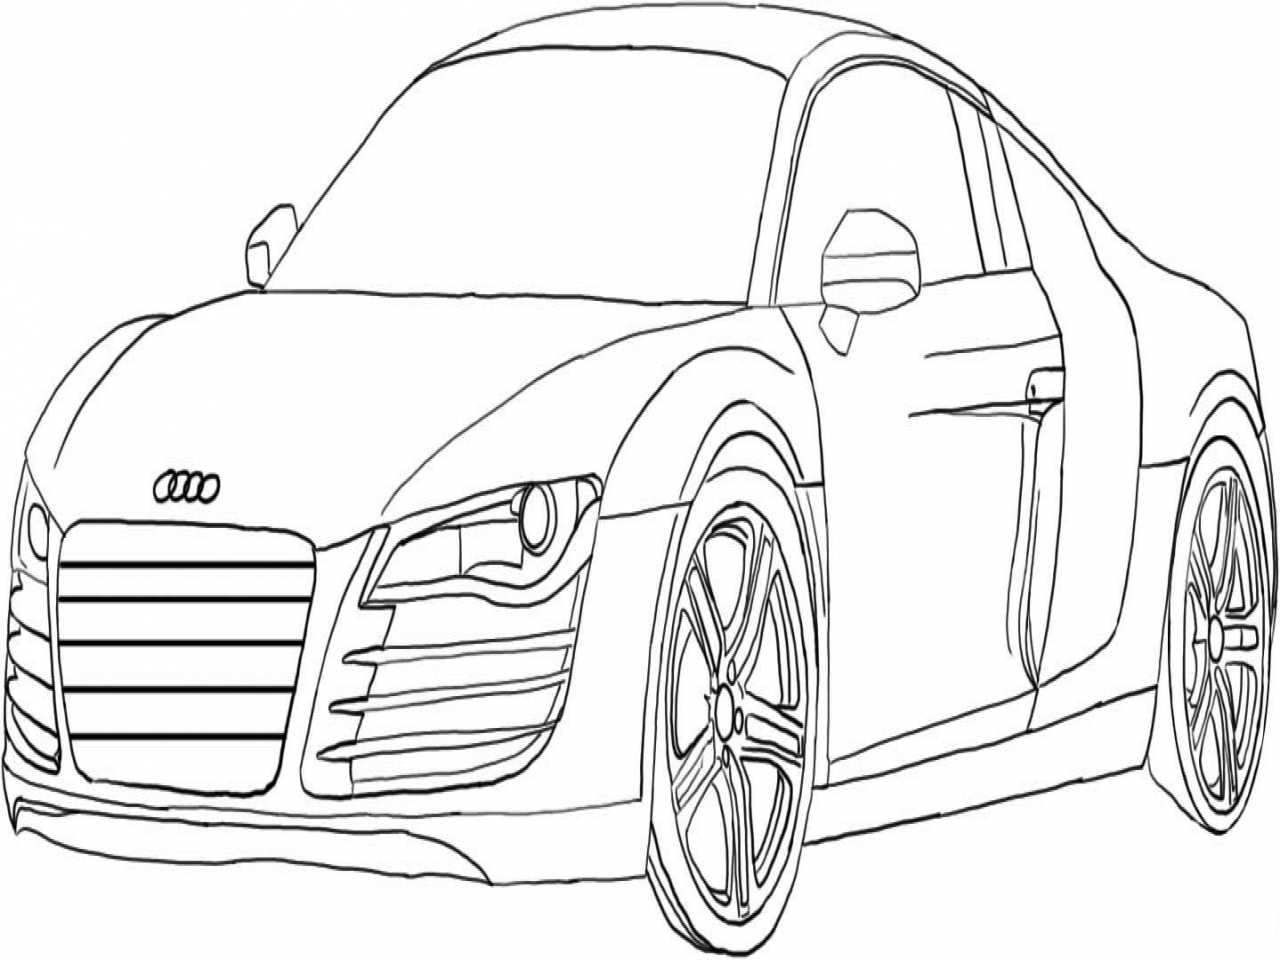 Bmw Car Drawing at GetDrawings | Free download